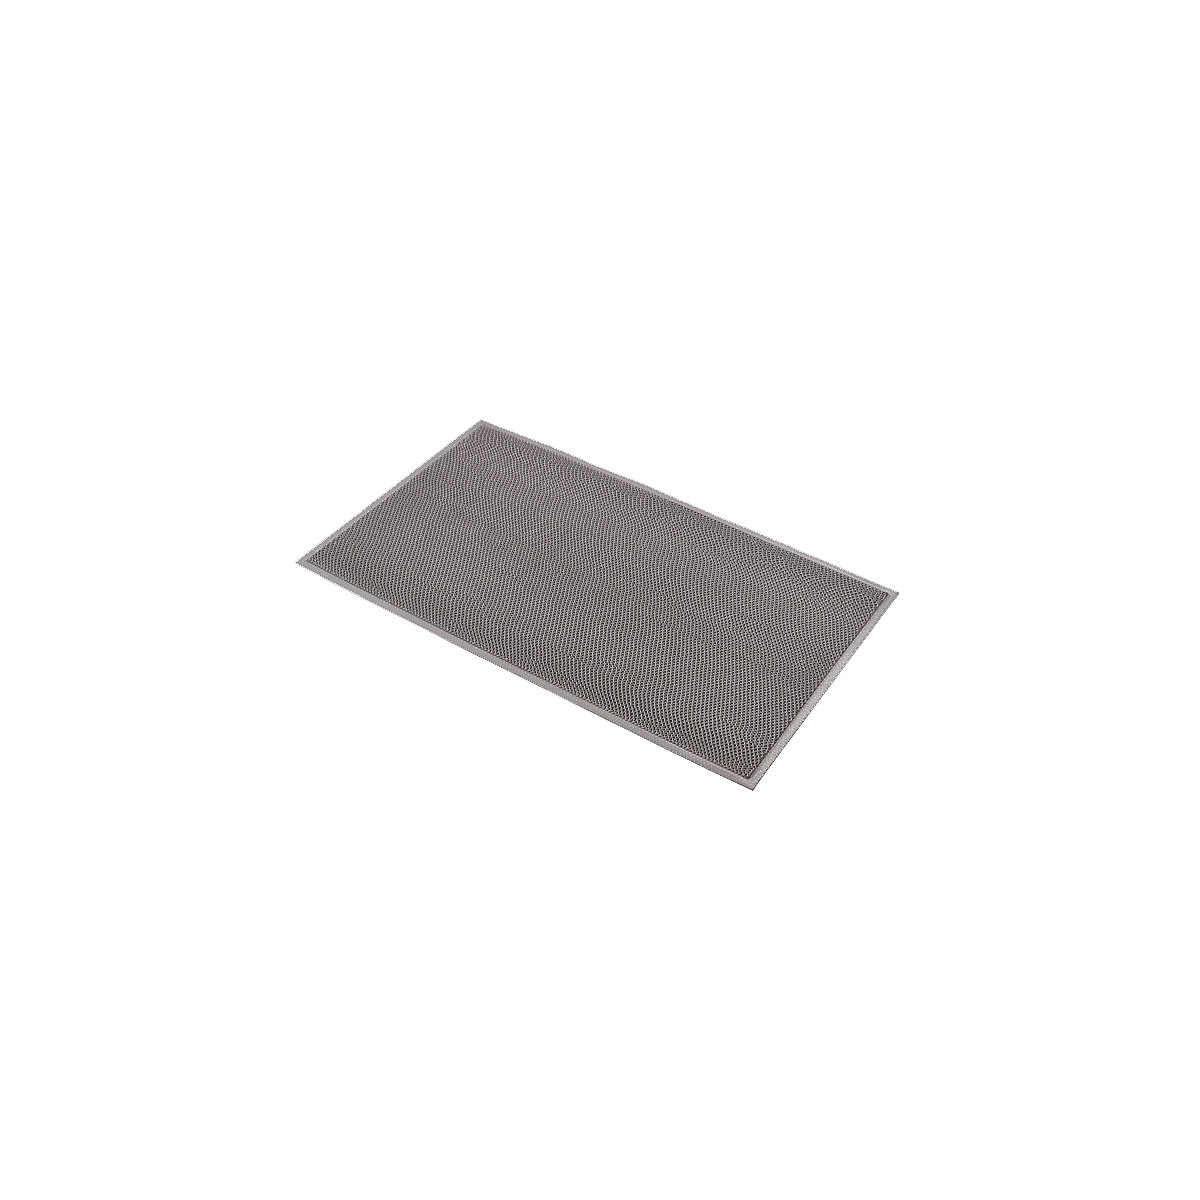 Entrance matting – NOTRAX, grey, 1500 x 900 mm-3